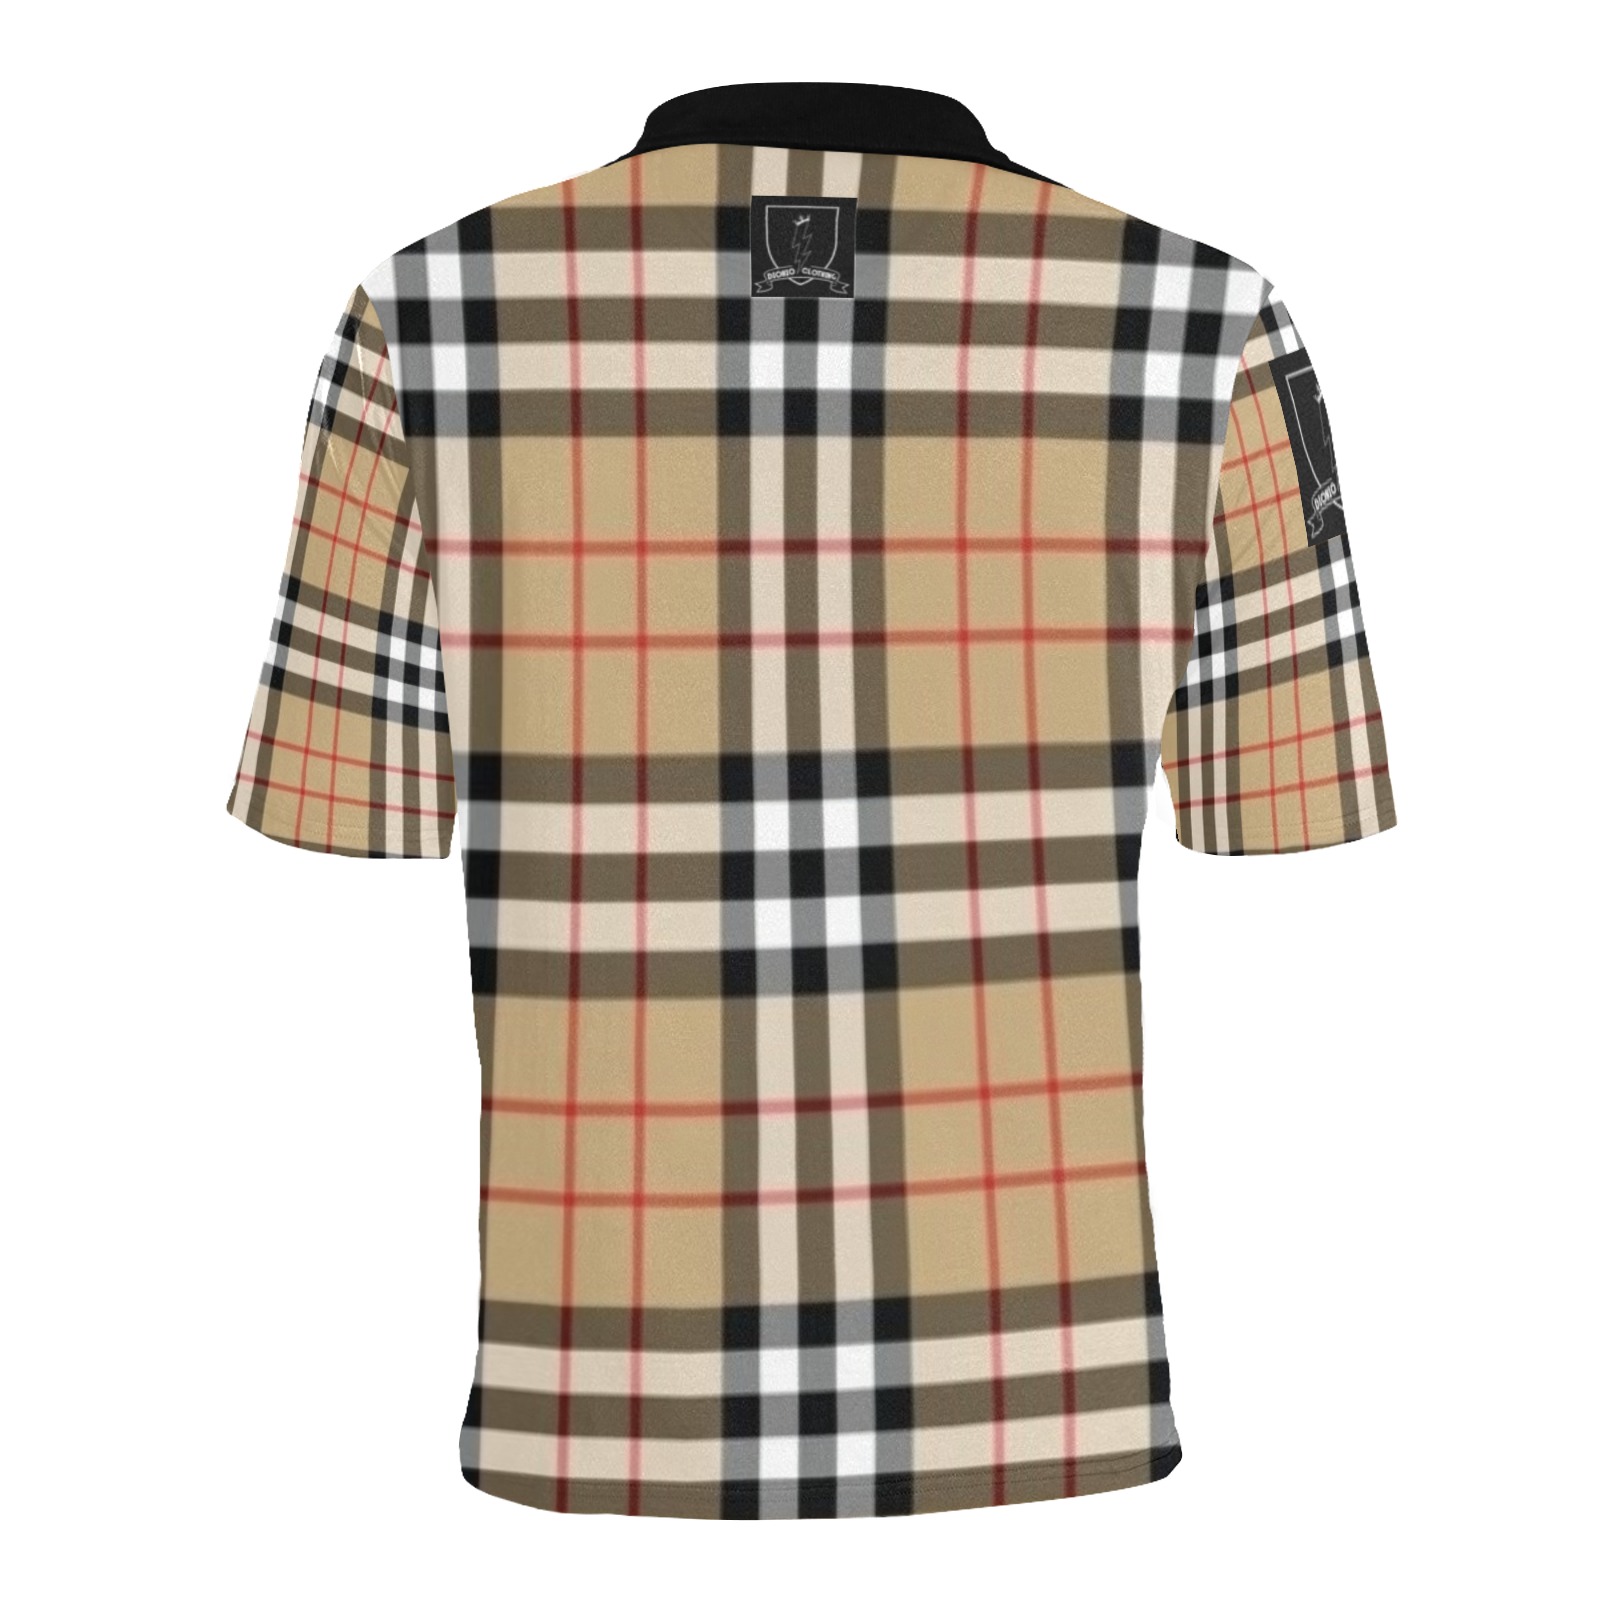 DIONIO Clothing - Badge & Brown Plaid Polo Shirt Men's All Over Print Polo Shirt (Model T55)